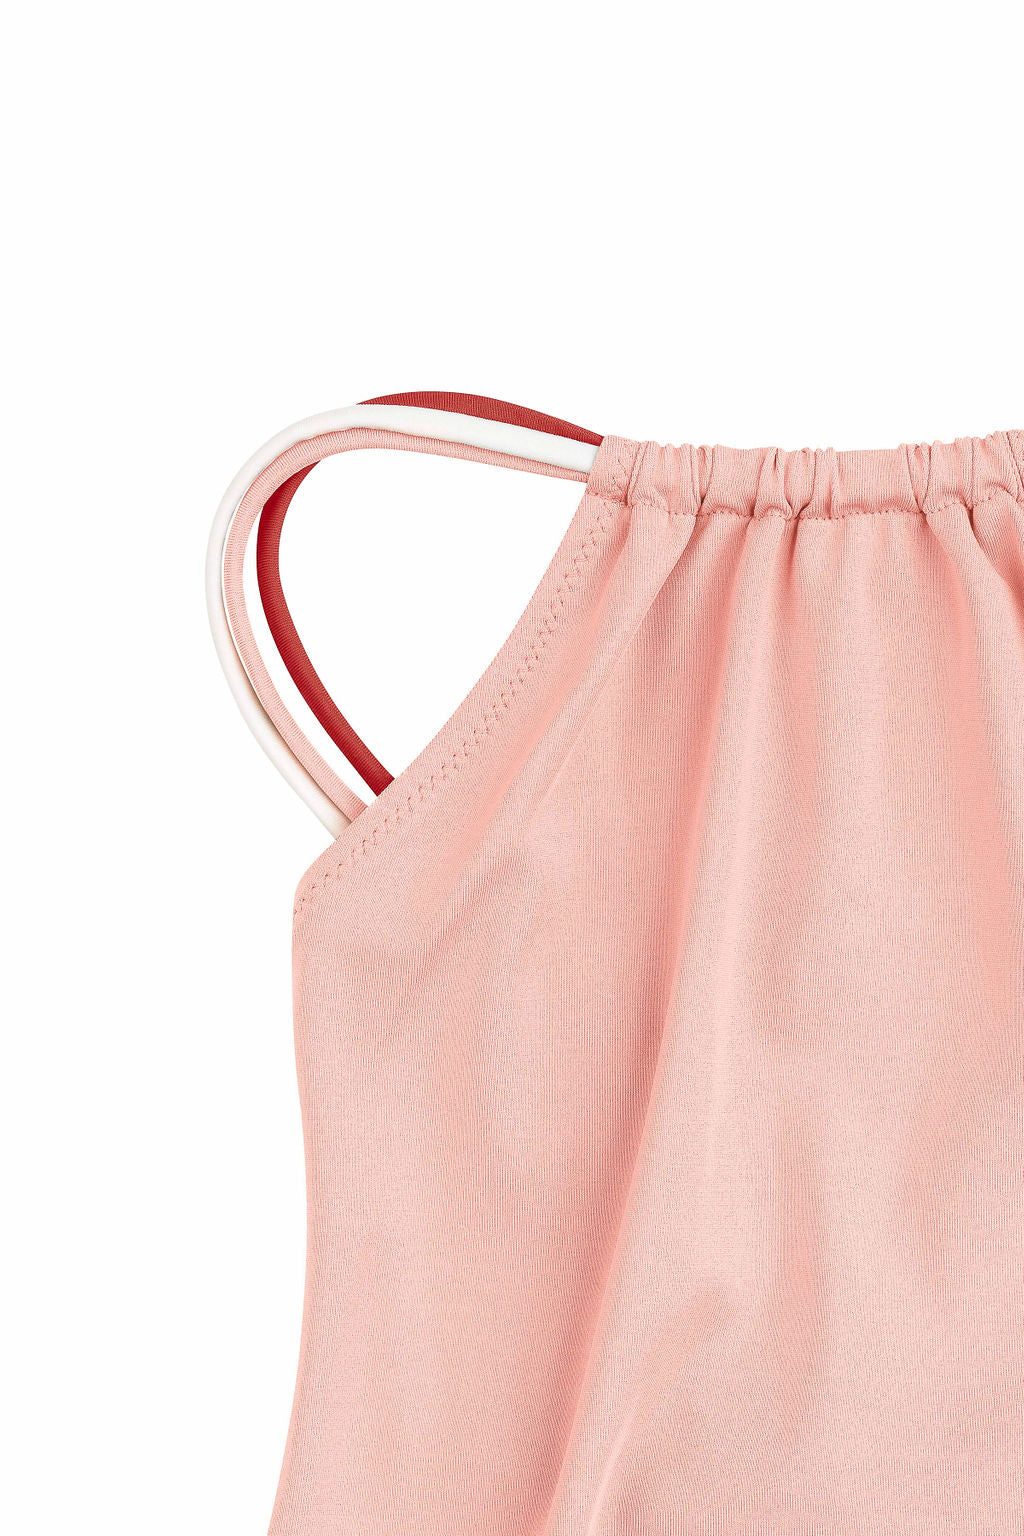 Swimsuit FRIDA Peach Pink - ملابس السباحة